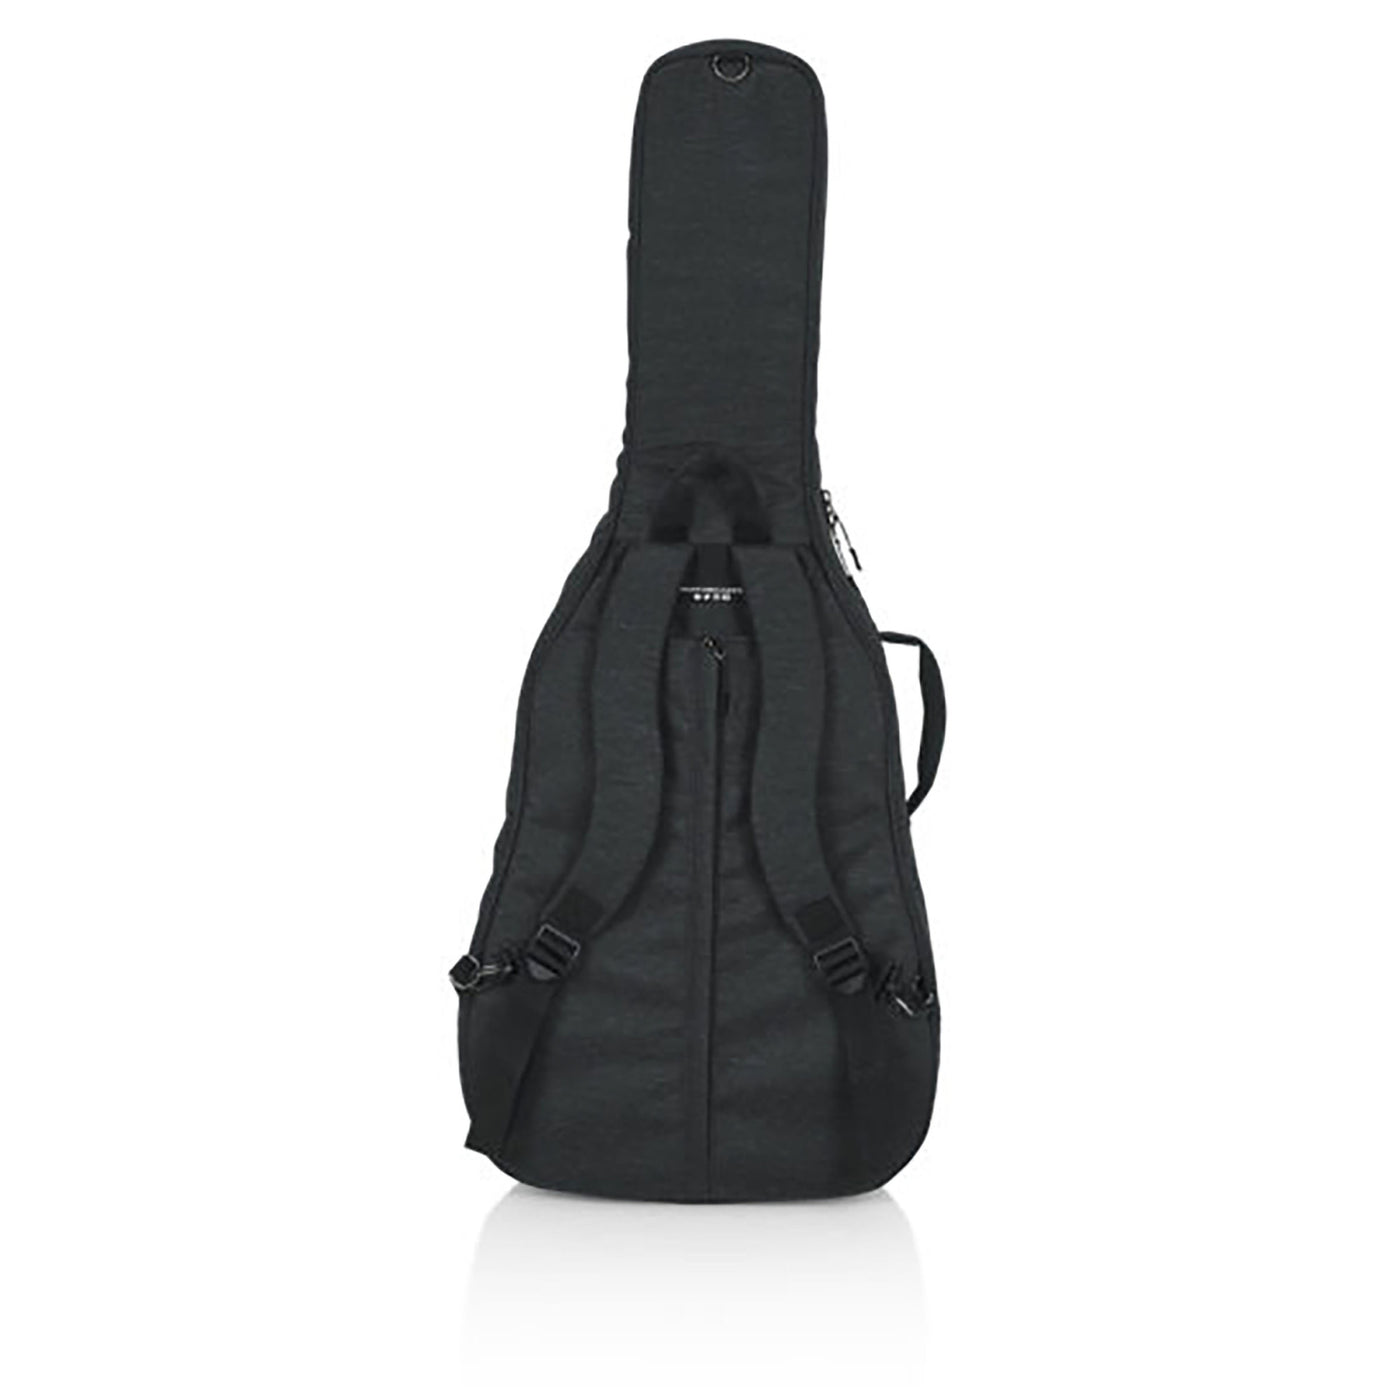 Black Transit Bag For Jumbo Acoustics